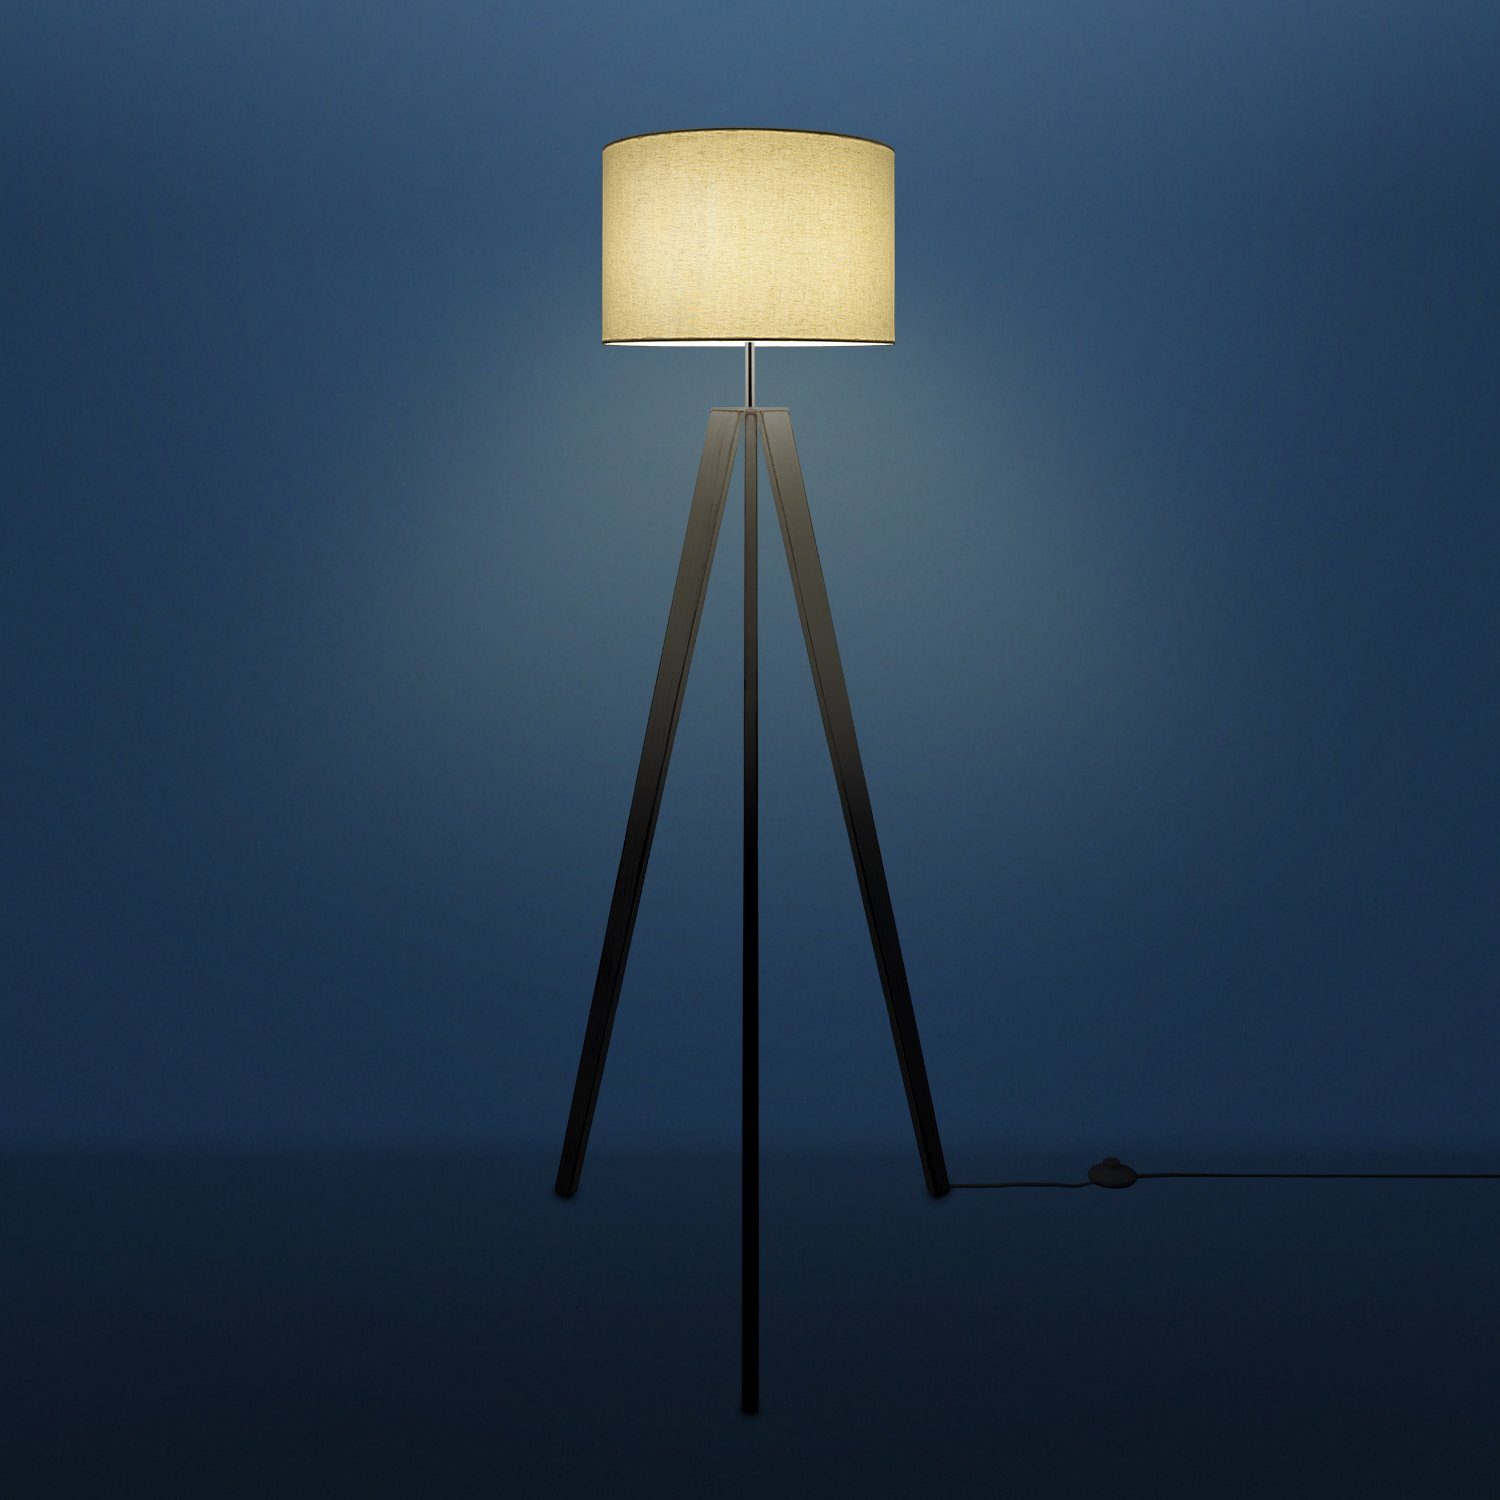 Paco Home Stehlampe Lampe uni Leuchtmittel, Fuß Vintage Skandinavischer Canvas LED Color, E27 Stil Stehlampe Wohnzimmer ohne